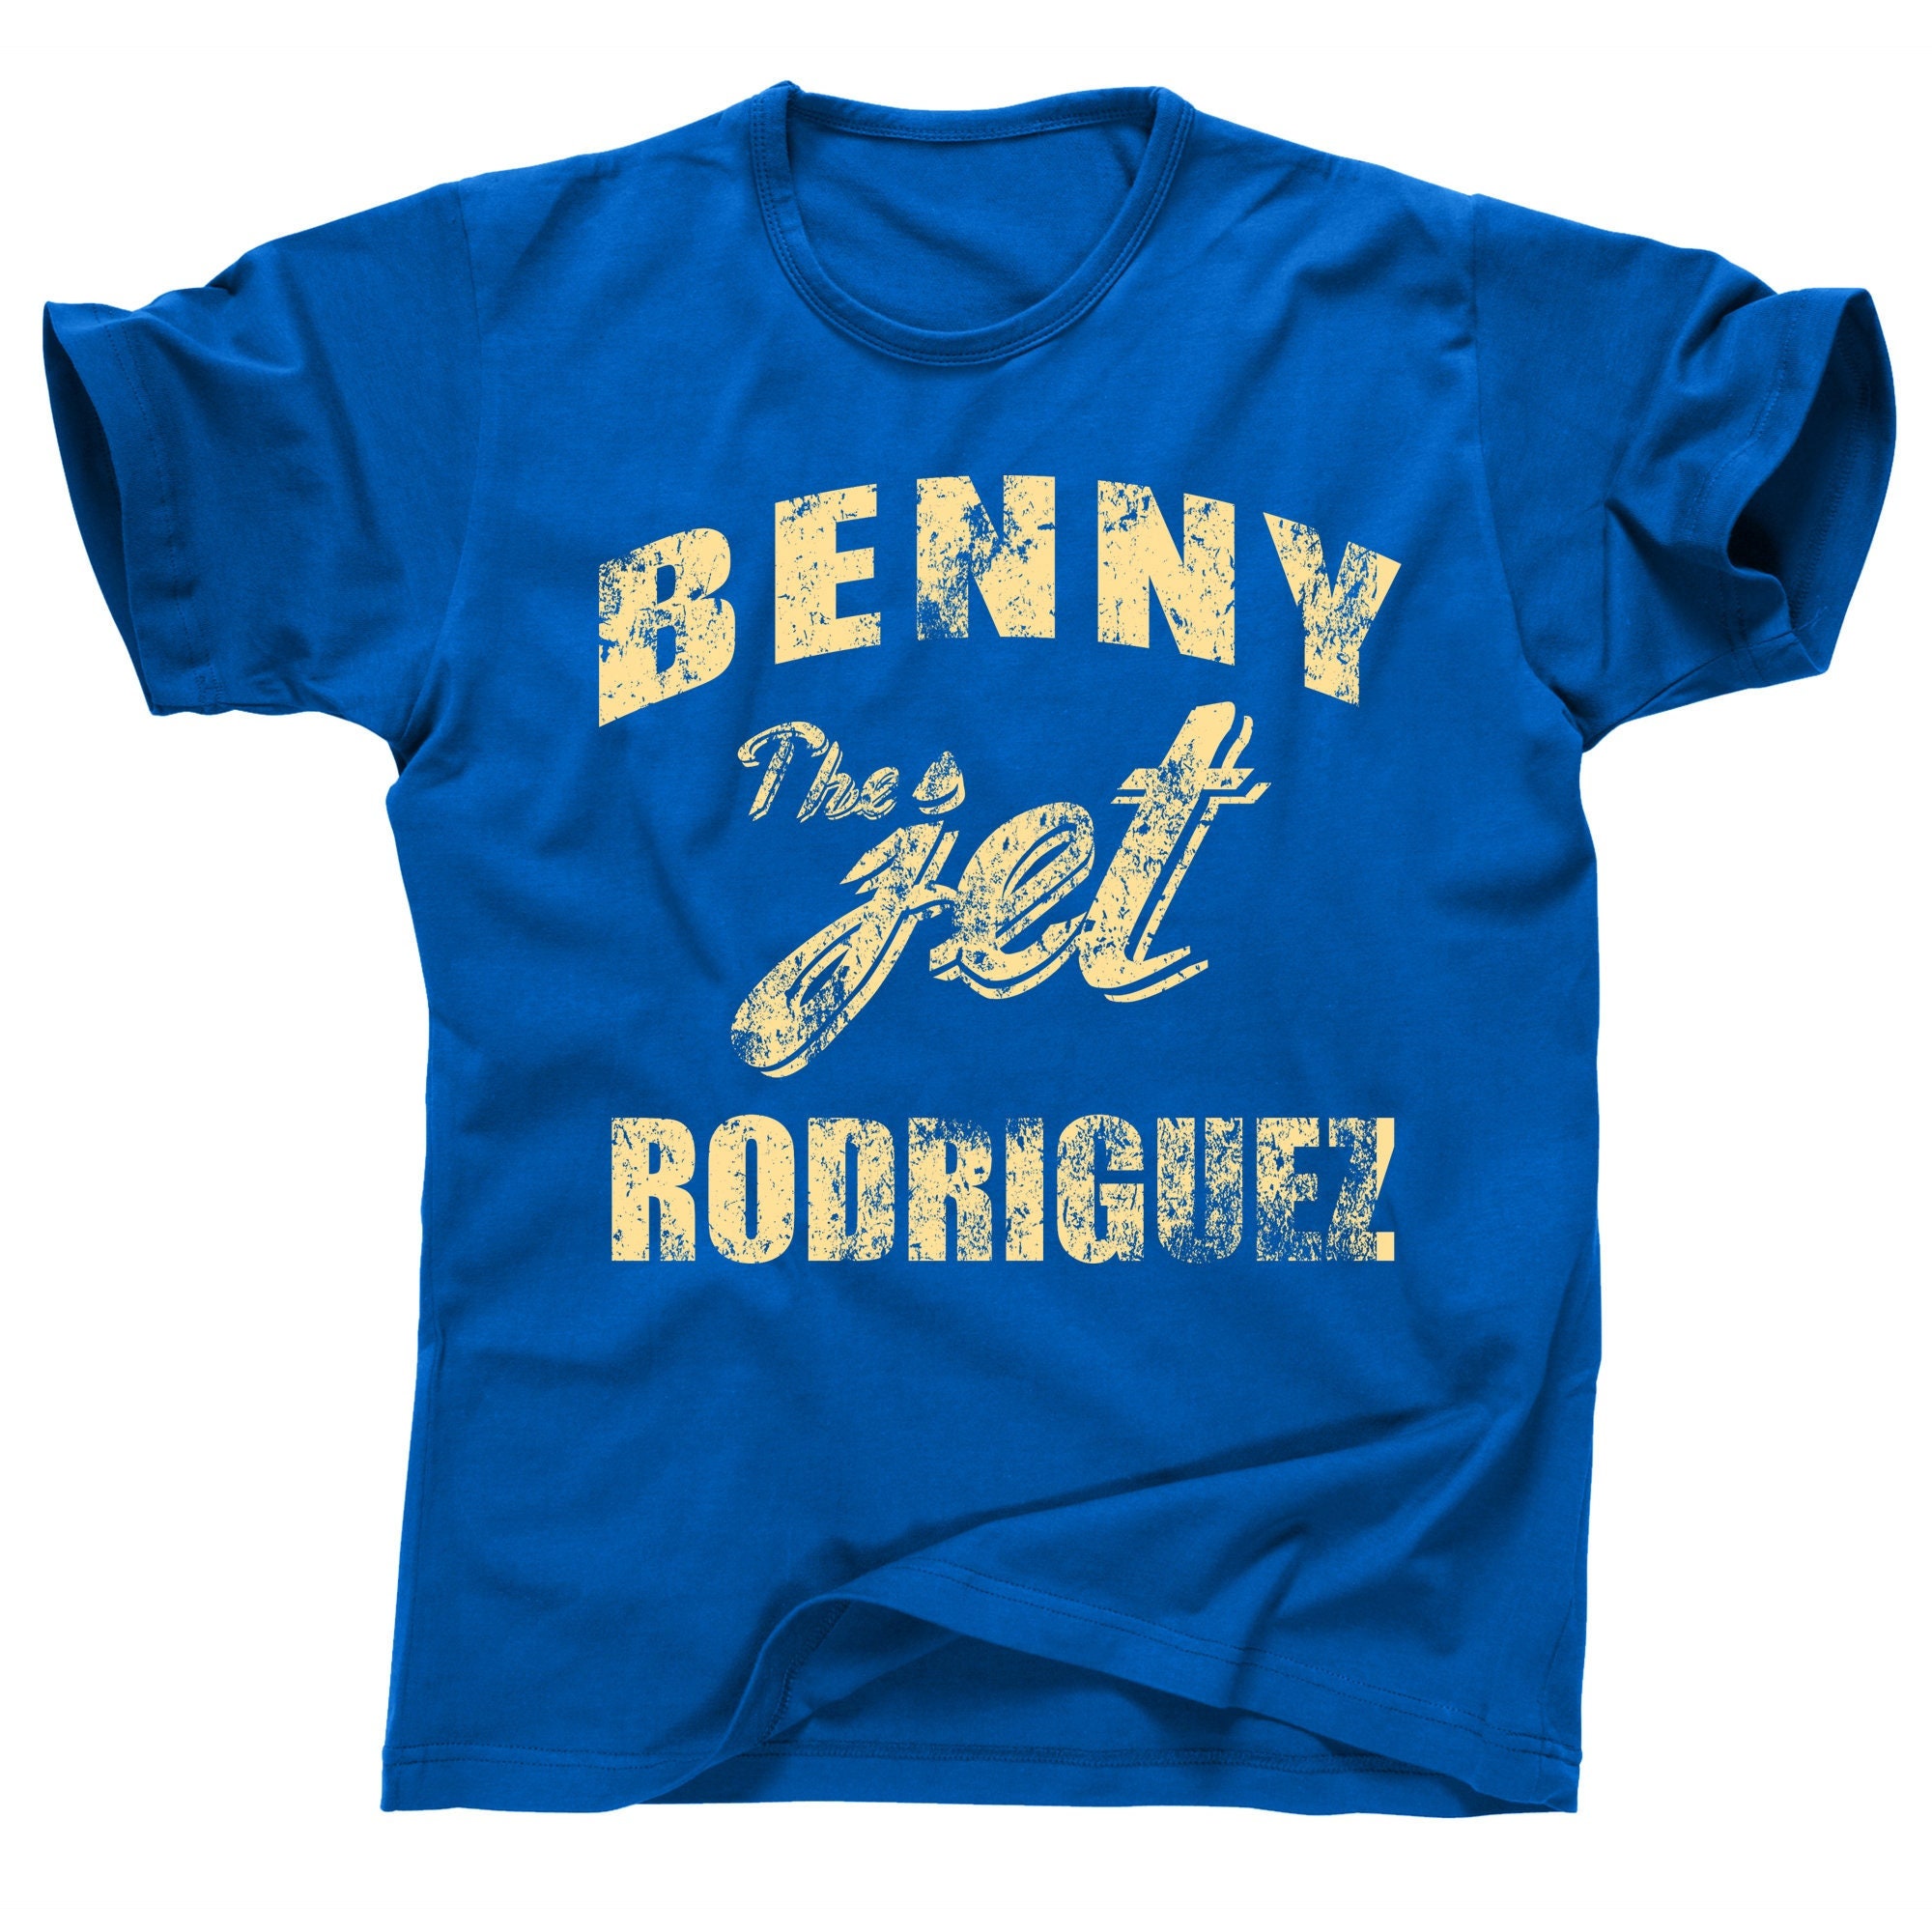 Benny Rodriguez The Sandlot Jersey – Classic Authentics